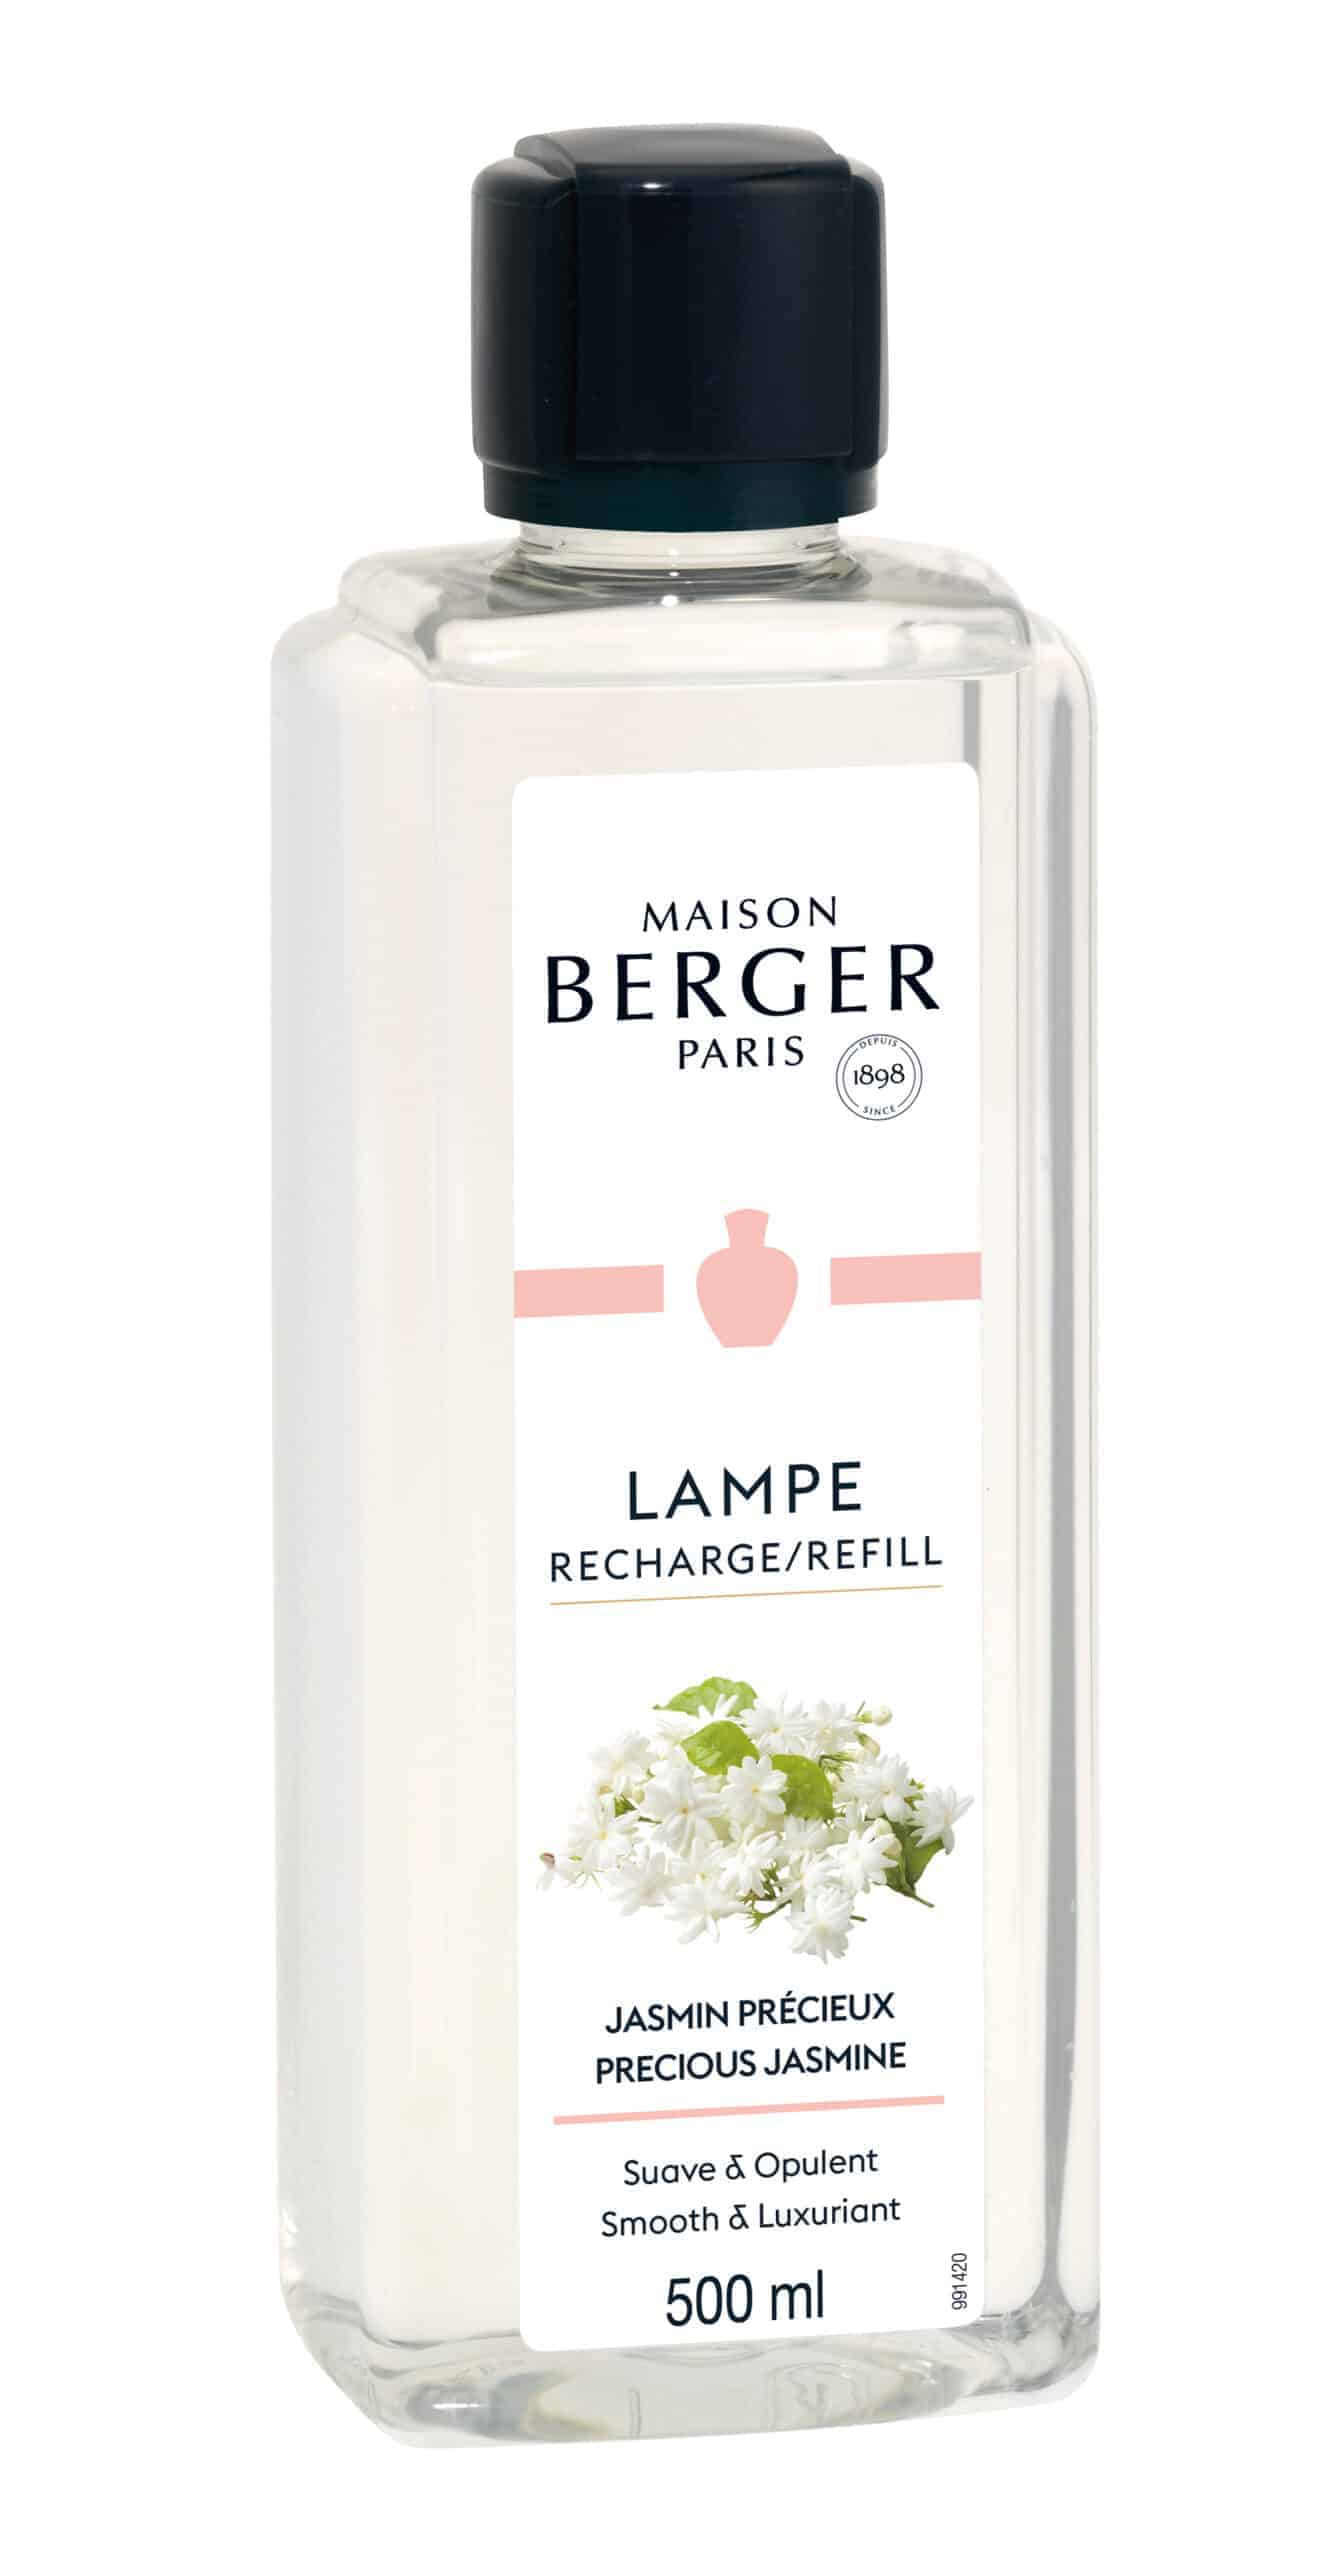 Maison Berger - parfum Precious Jasmine - 500 ml.